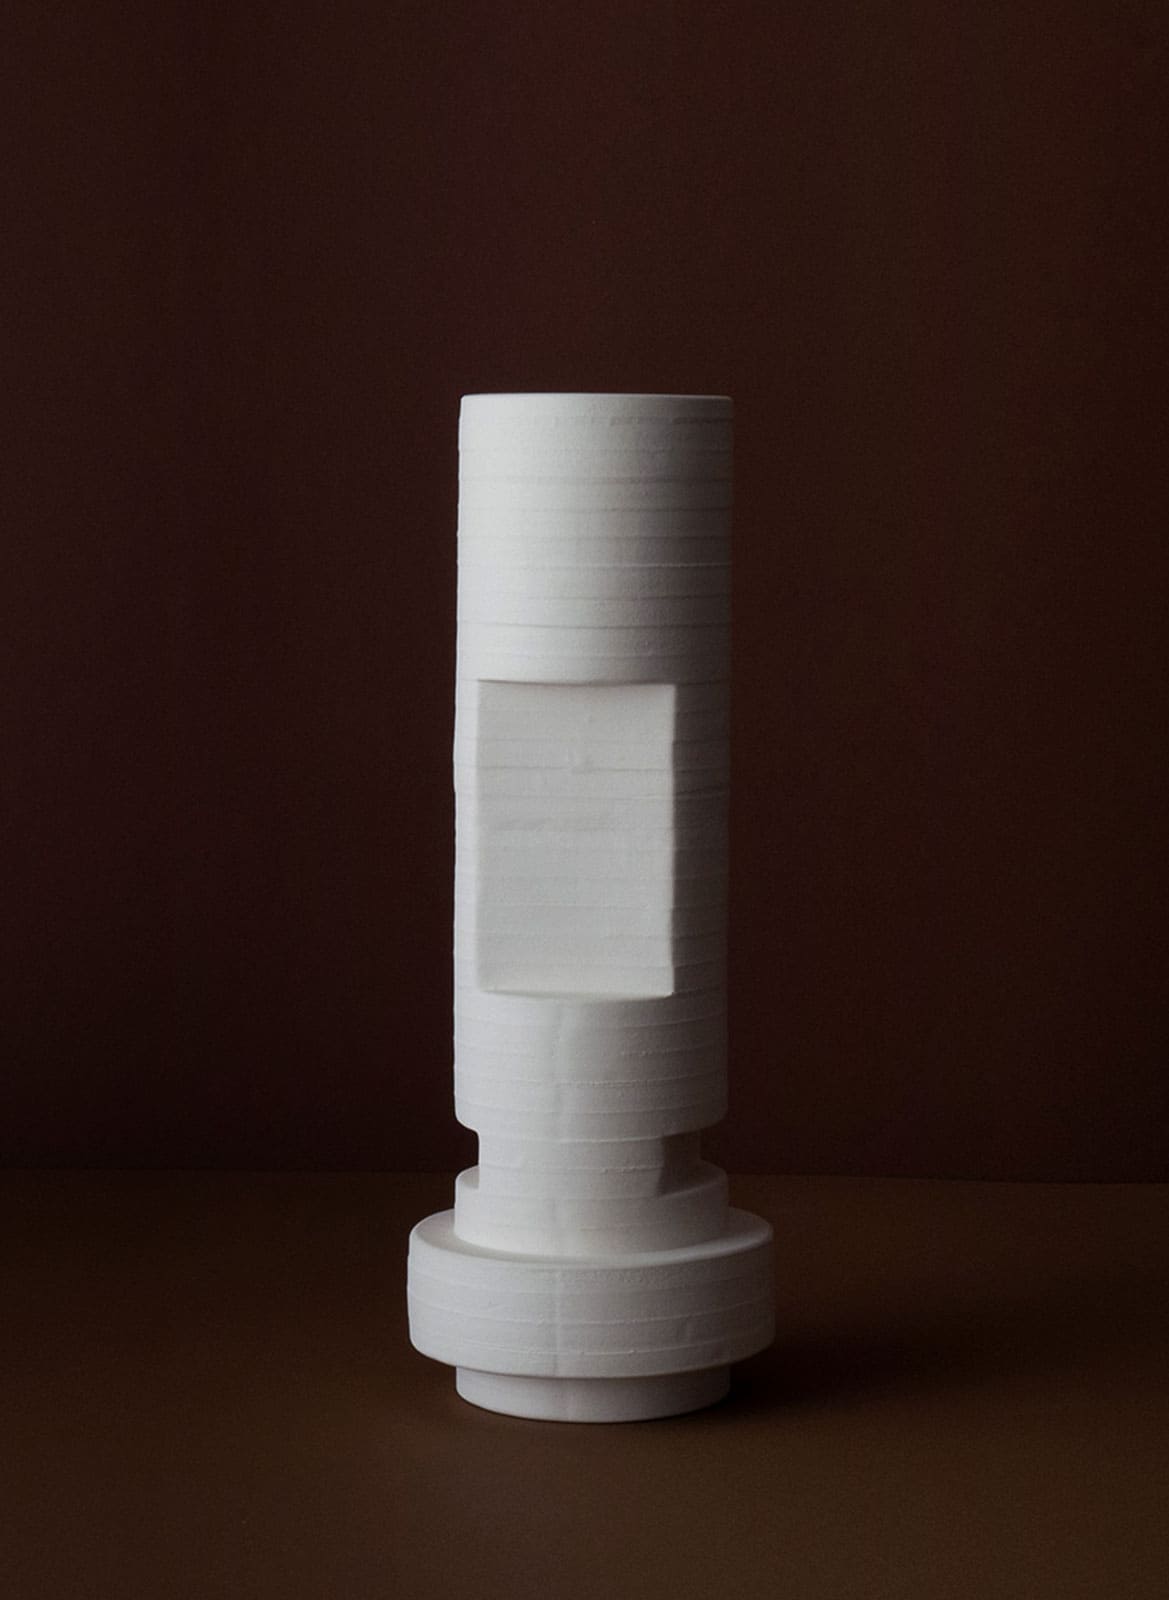 handmade sculptural white ceramic vase made by Yaara Rabinovitch